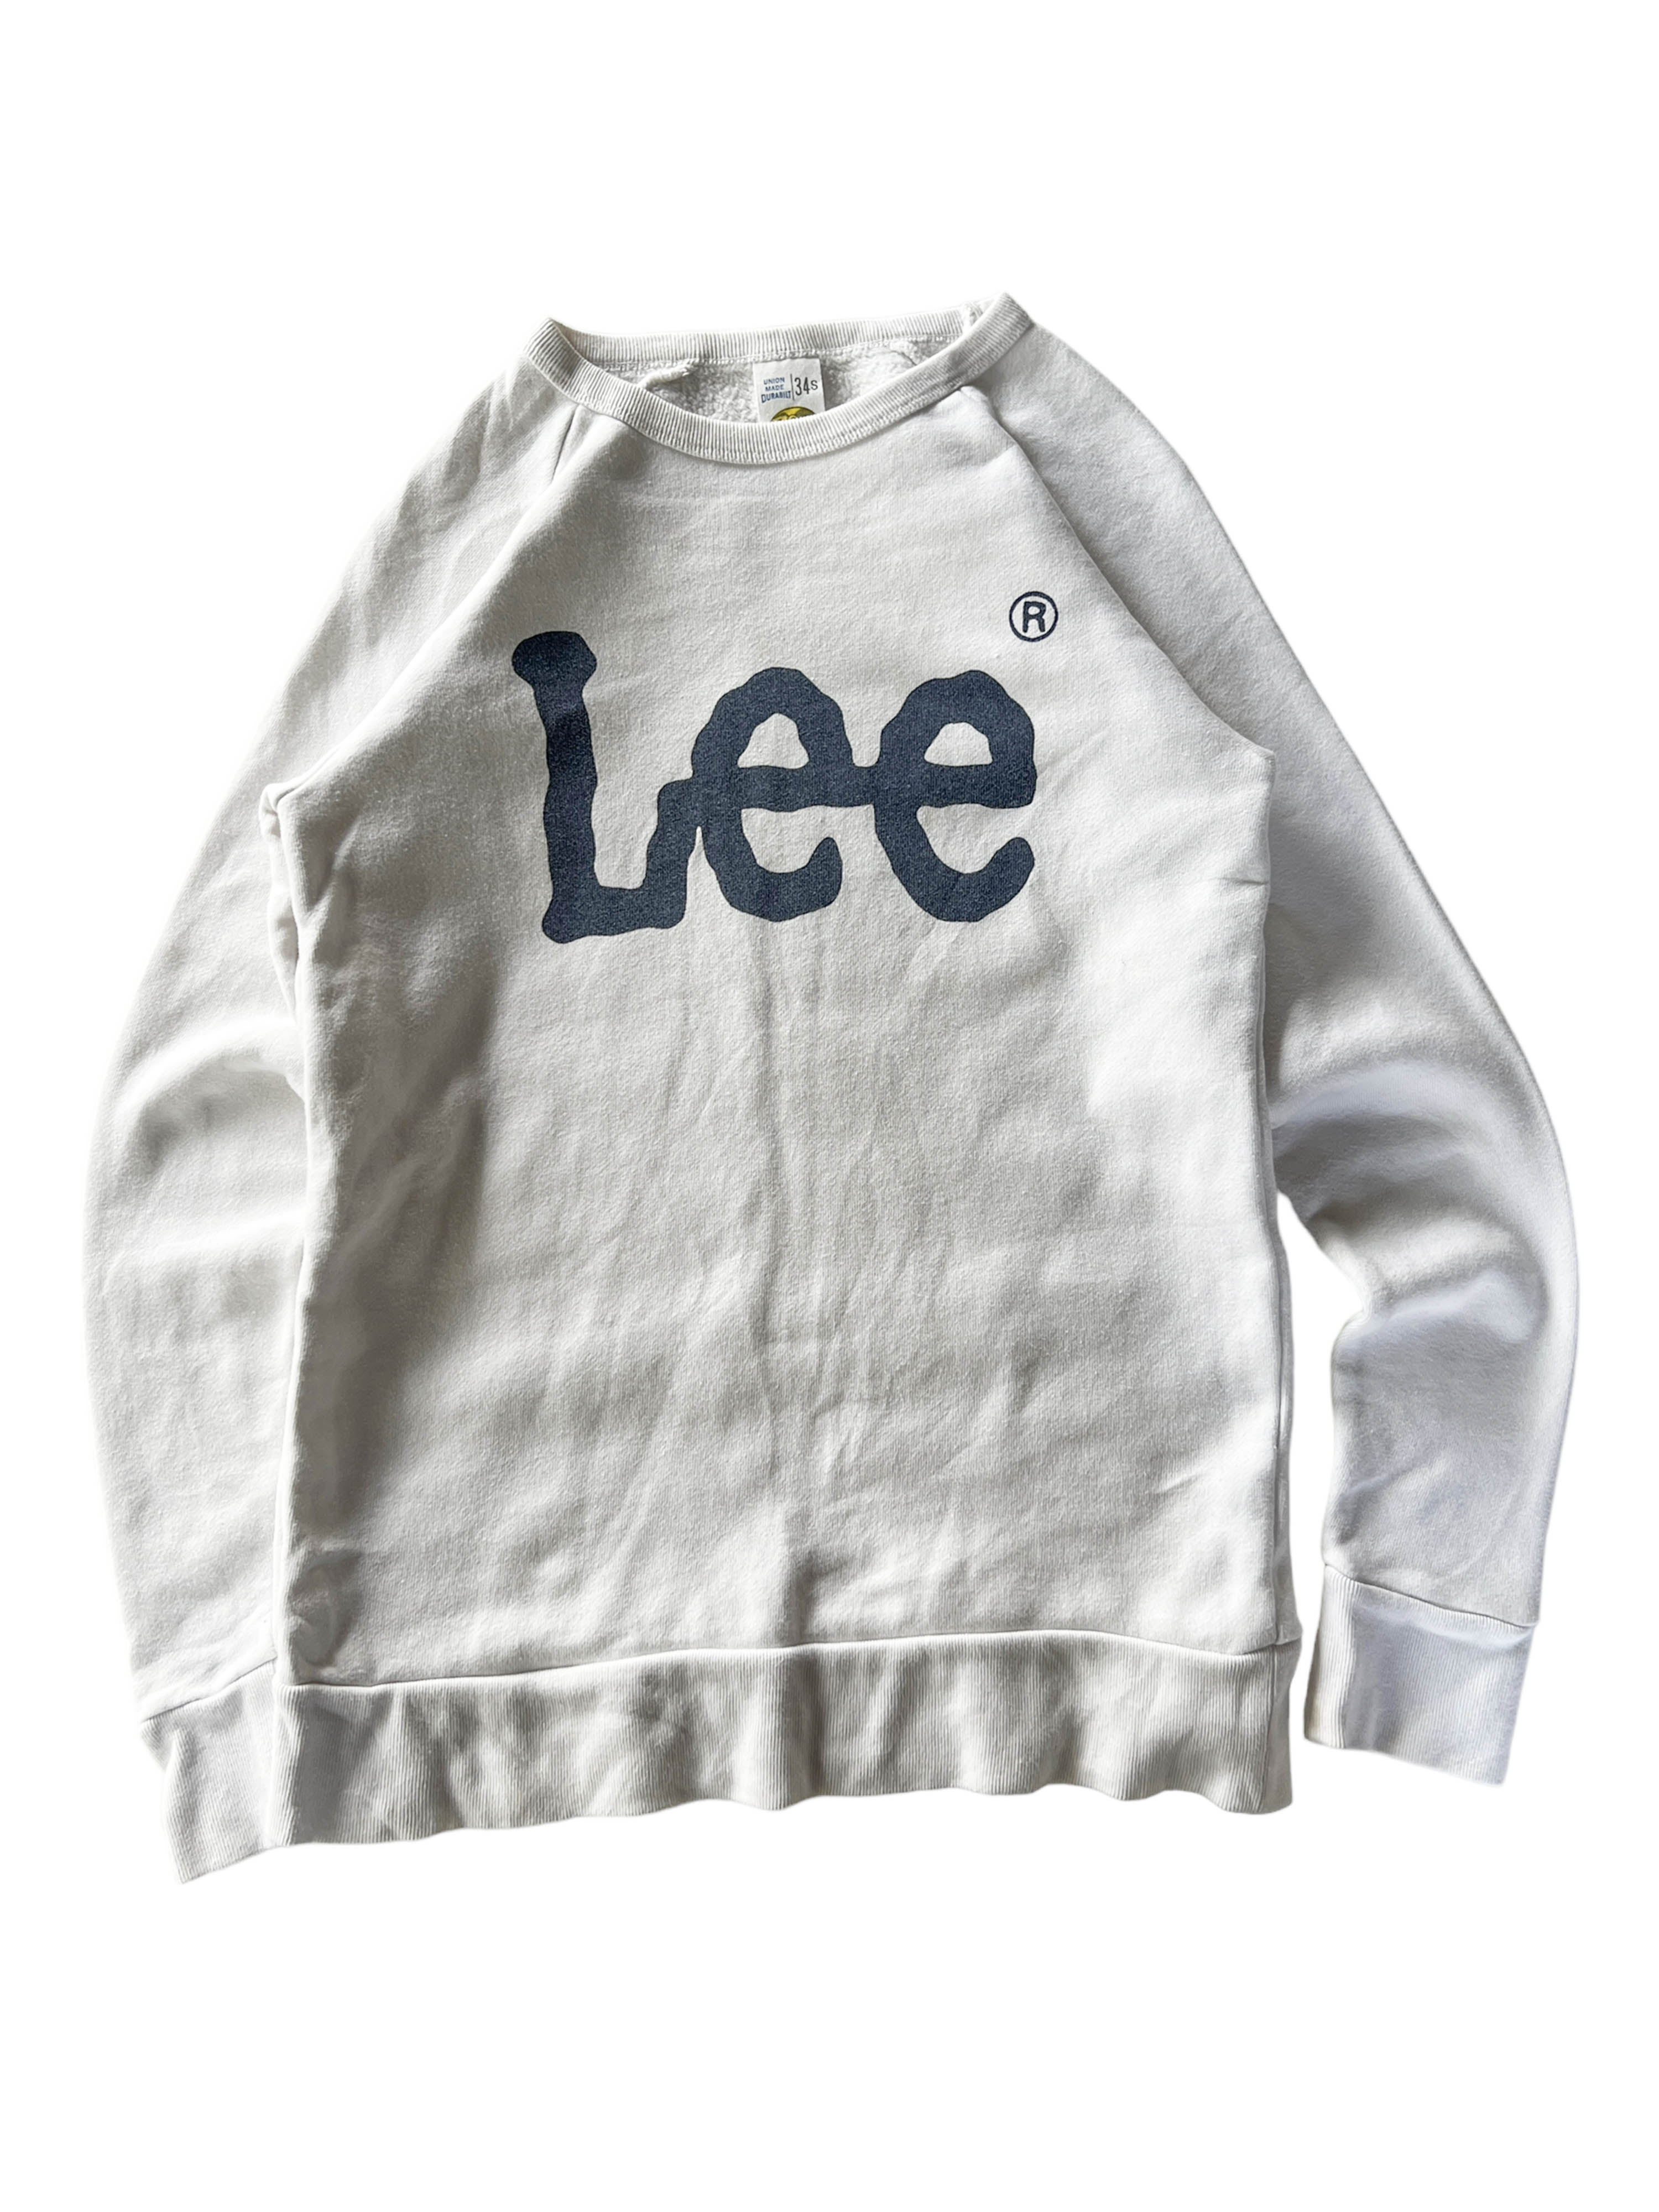 90s Lee sweatshirts